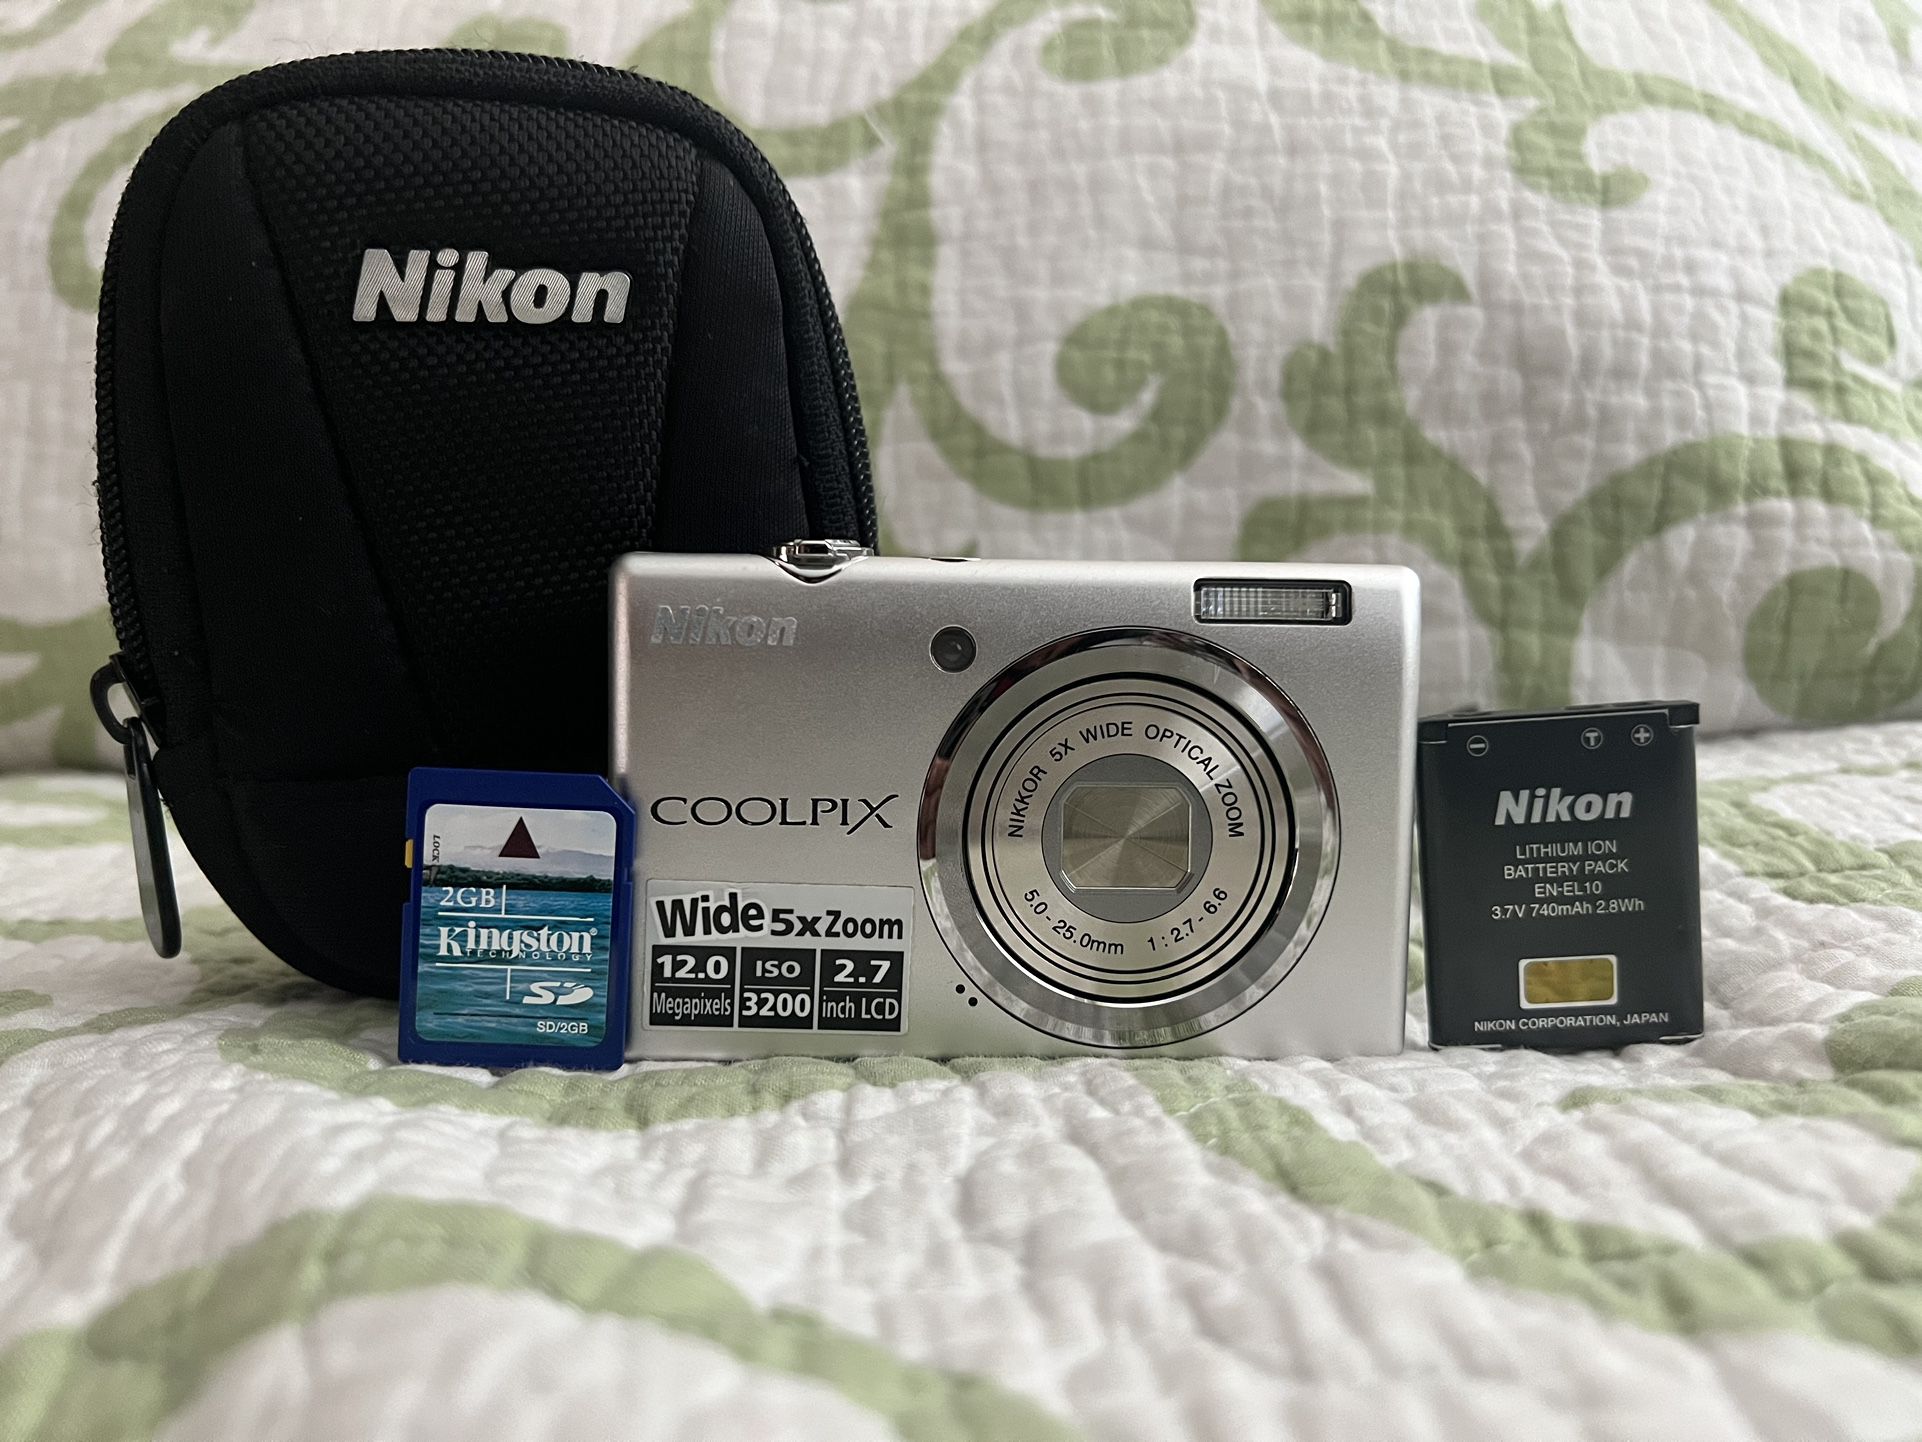 Nikon COOLPIX S570 12.0MP Digital Camera - white